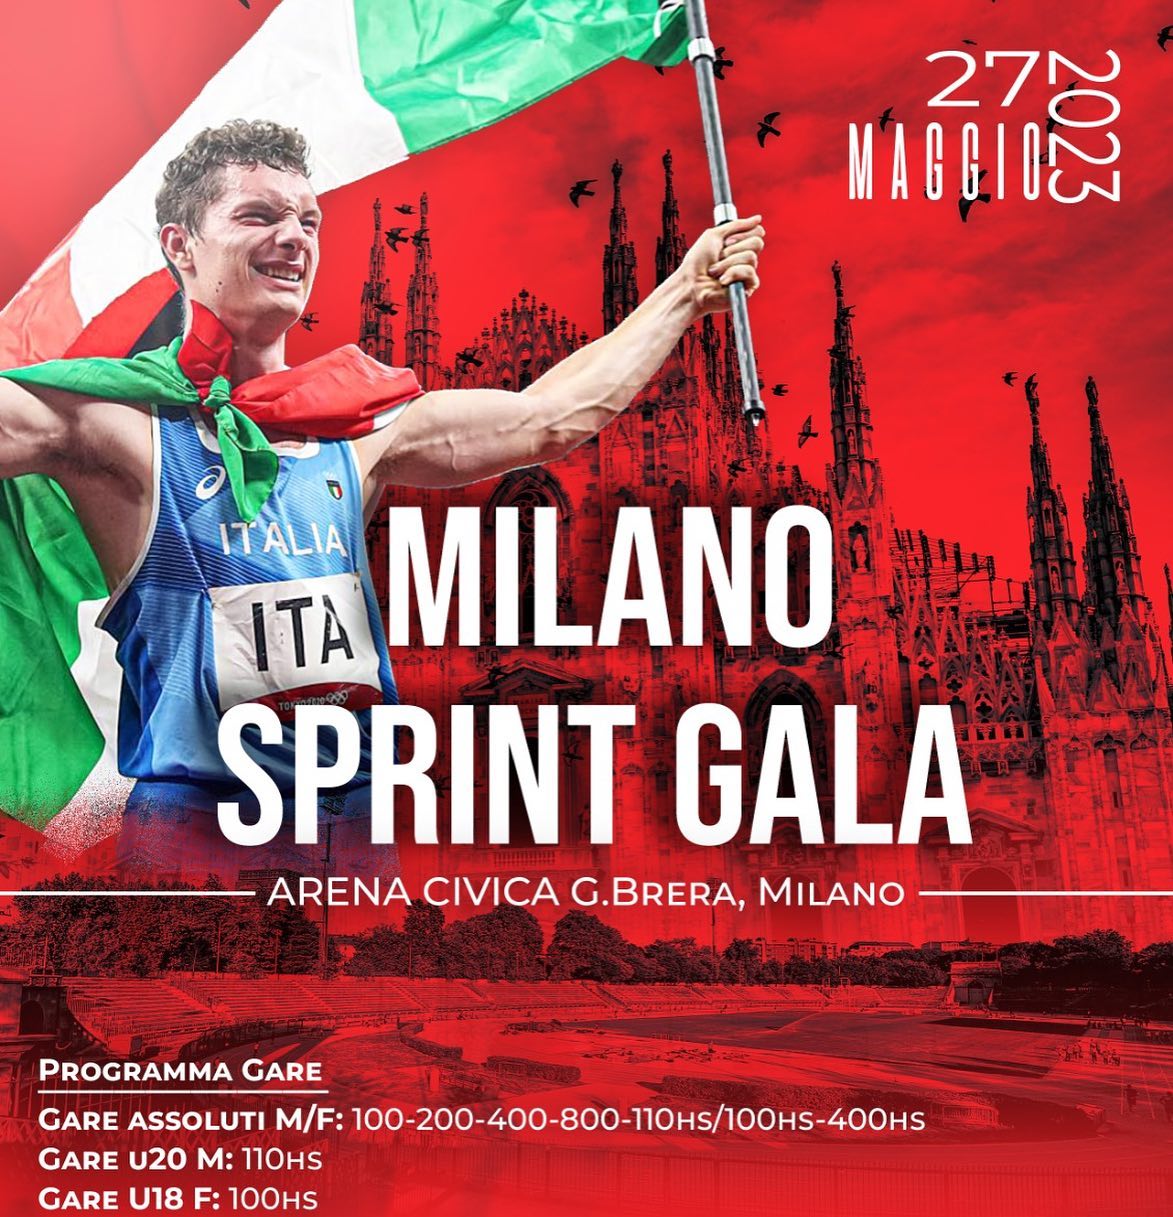 Milano Sprint Gala locandina